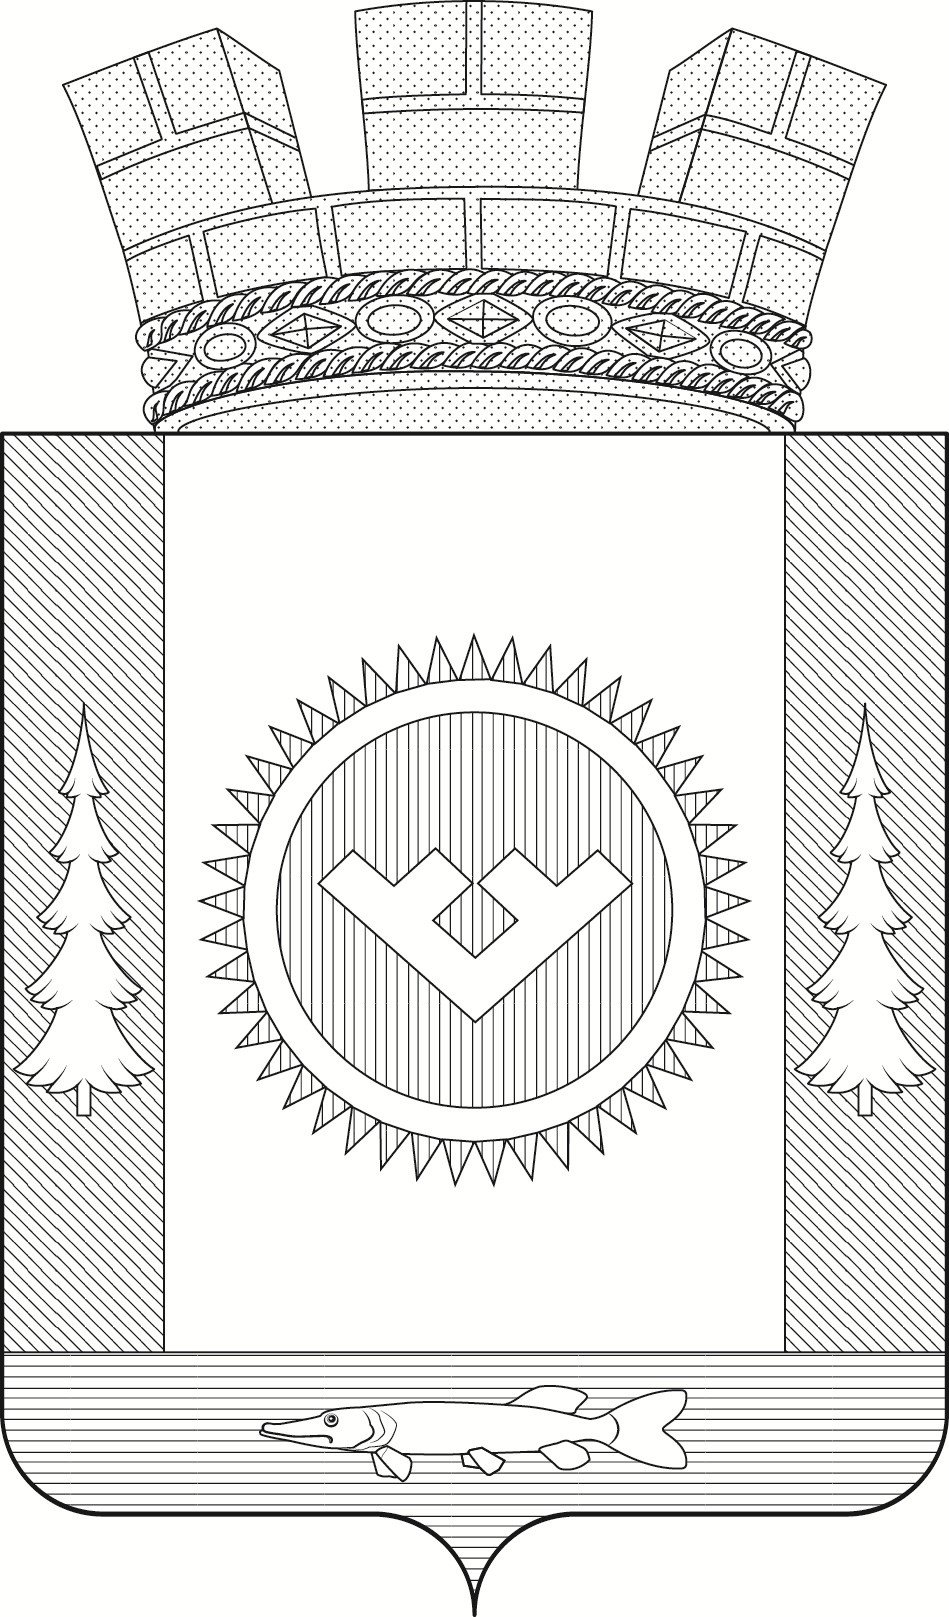 Герб Ханты-Мансийского автономного округа - Югры | конференц-зал-самара.рф